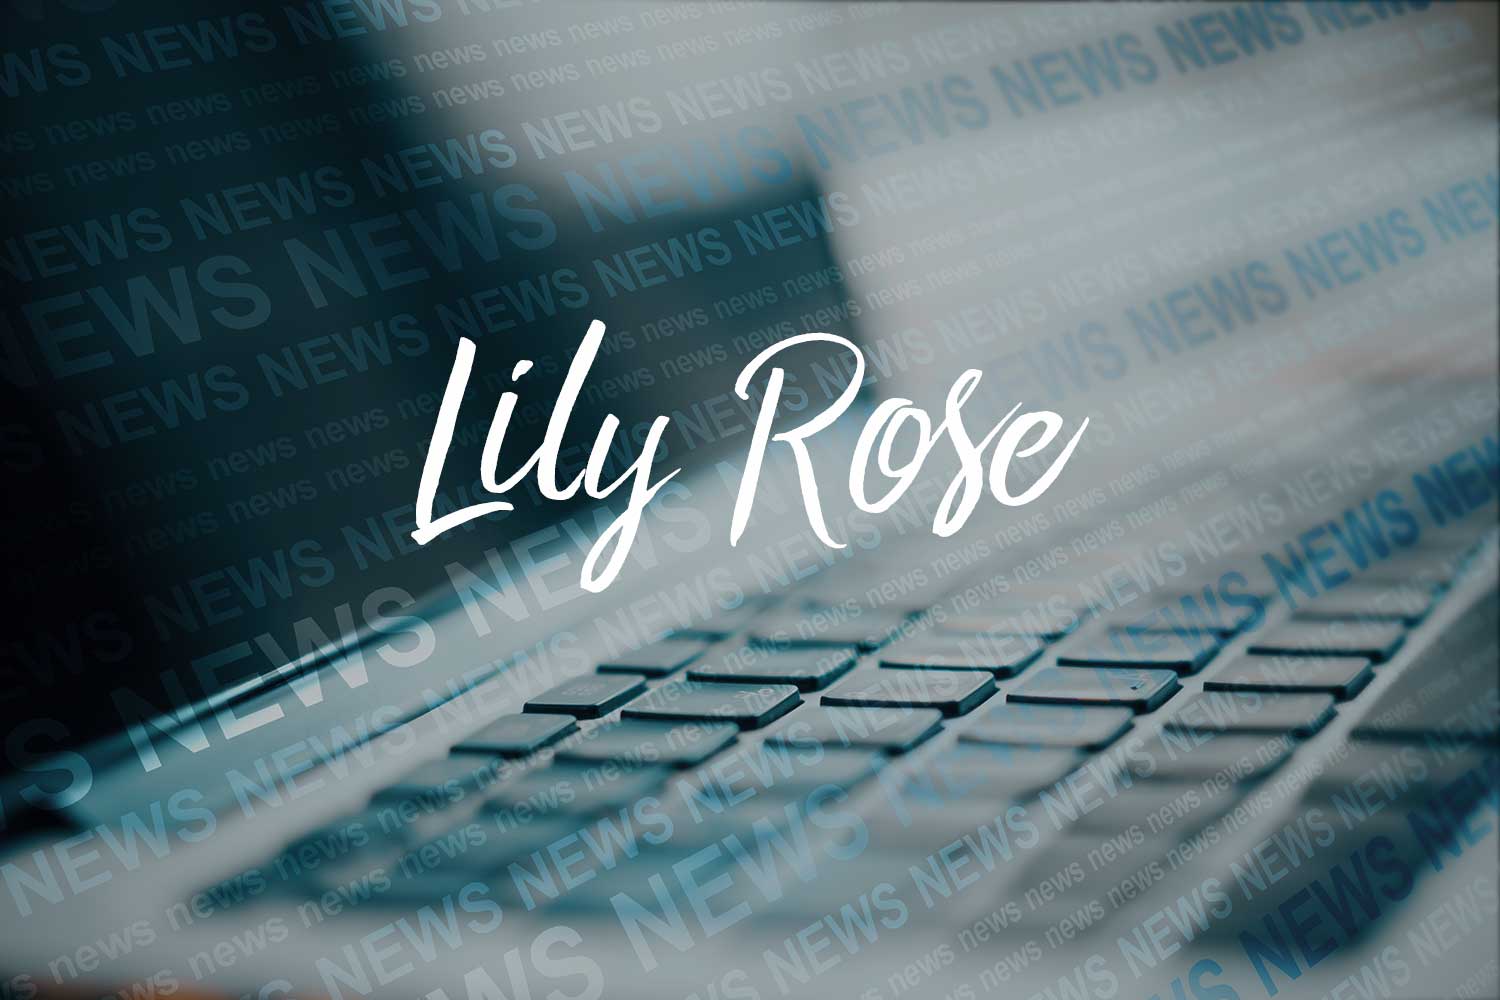 Lily Rose DMA Podcast - Building Your Health And Wellness Brand With Davina Kaonohi